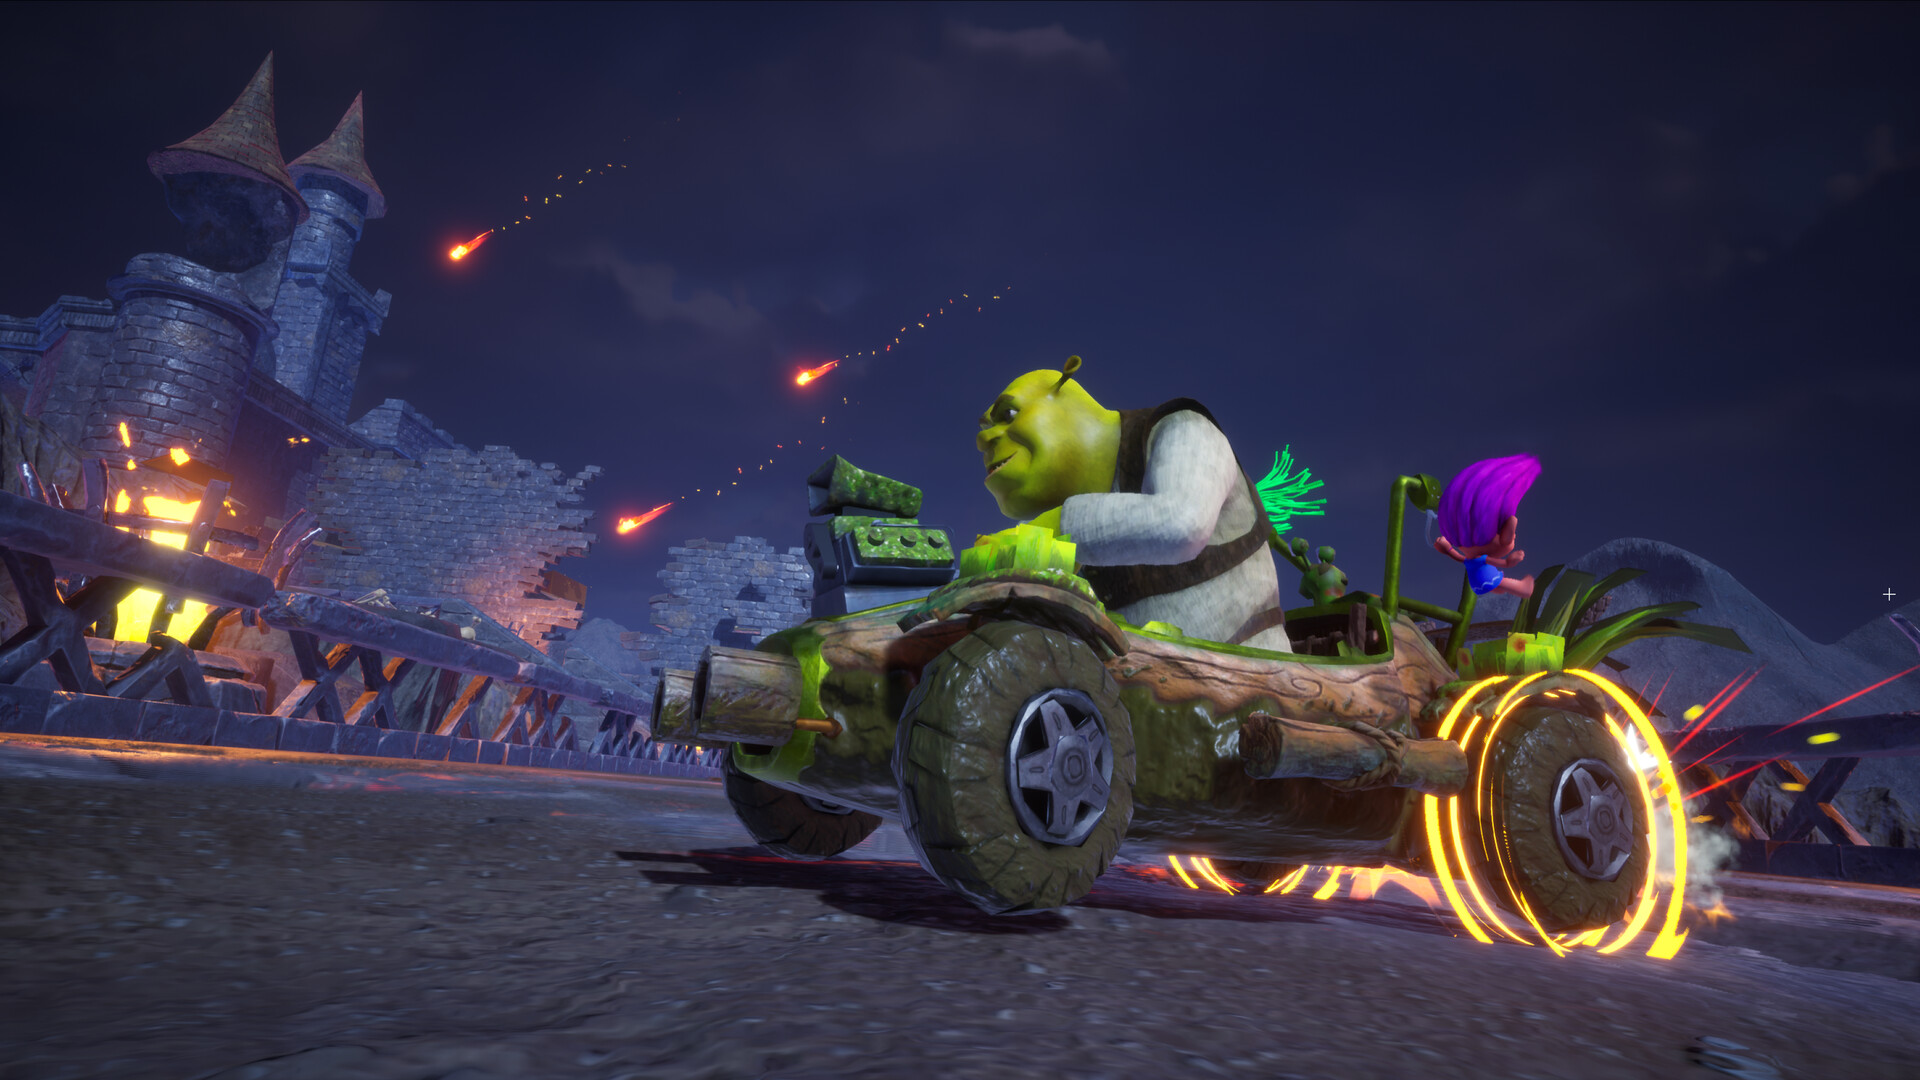 DreamWorks All-Star Kart Racing Steam CD Key